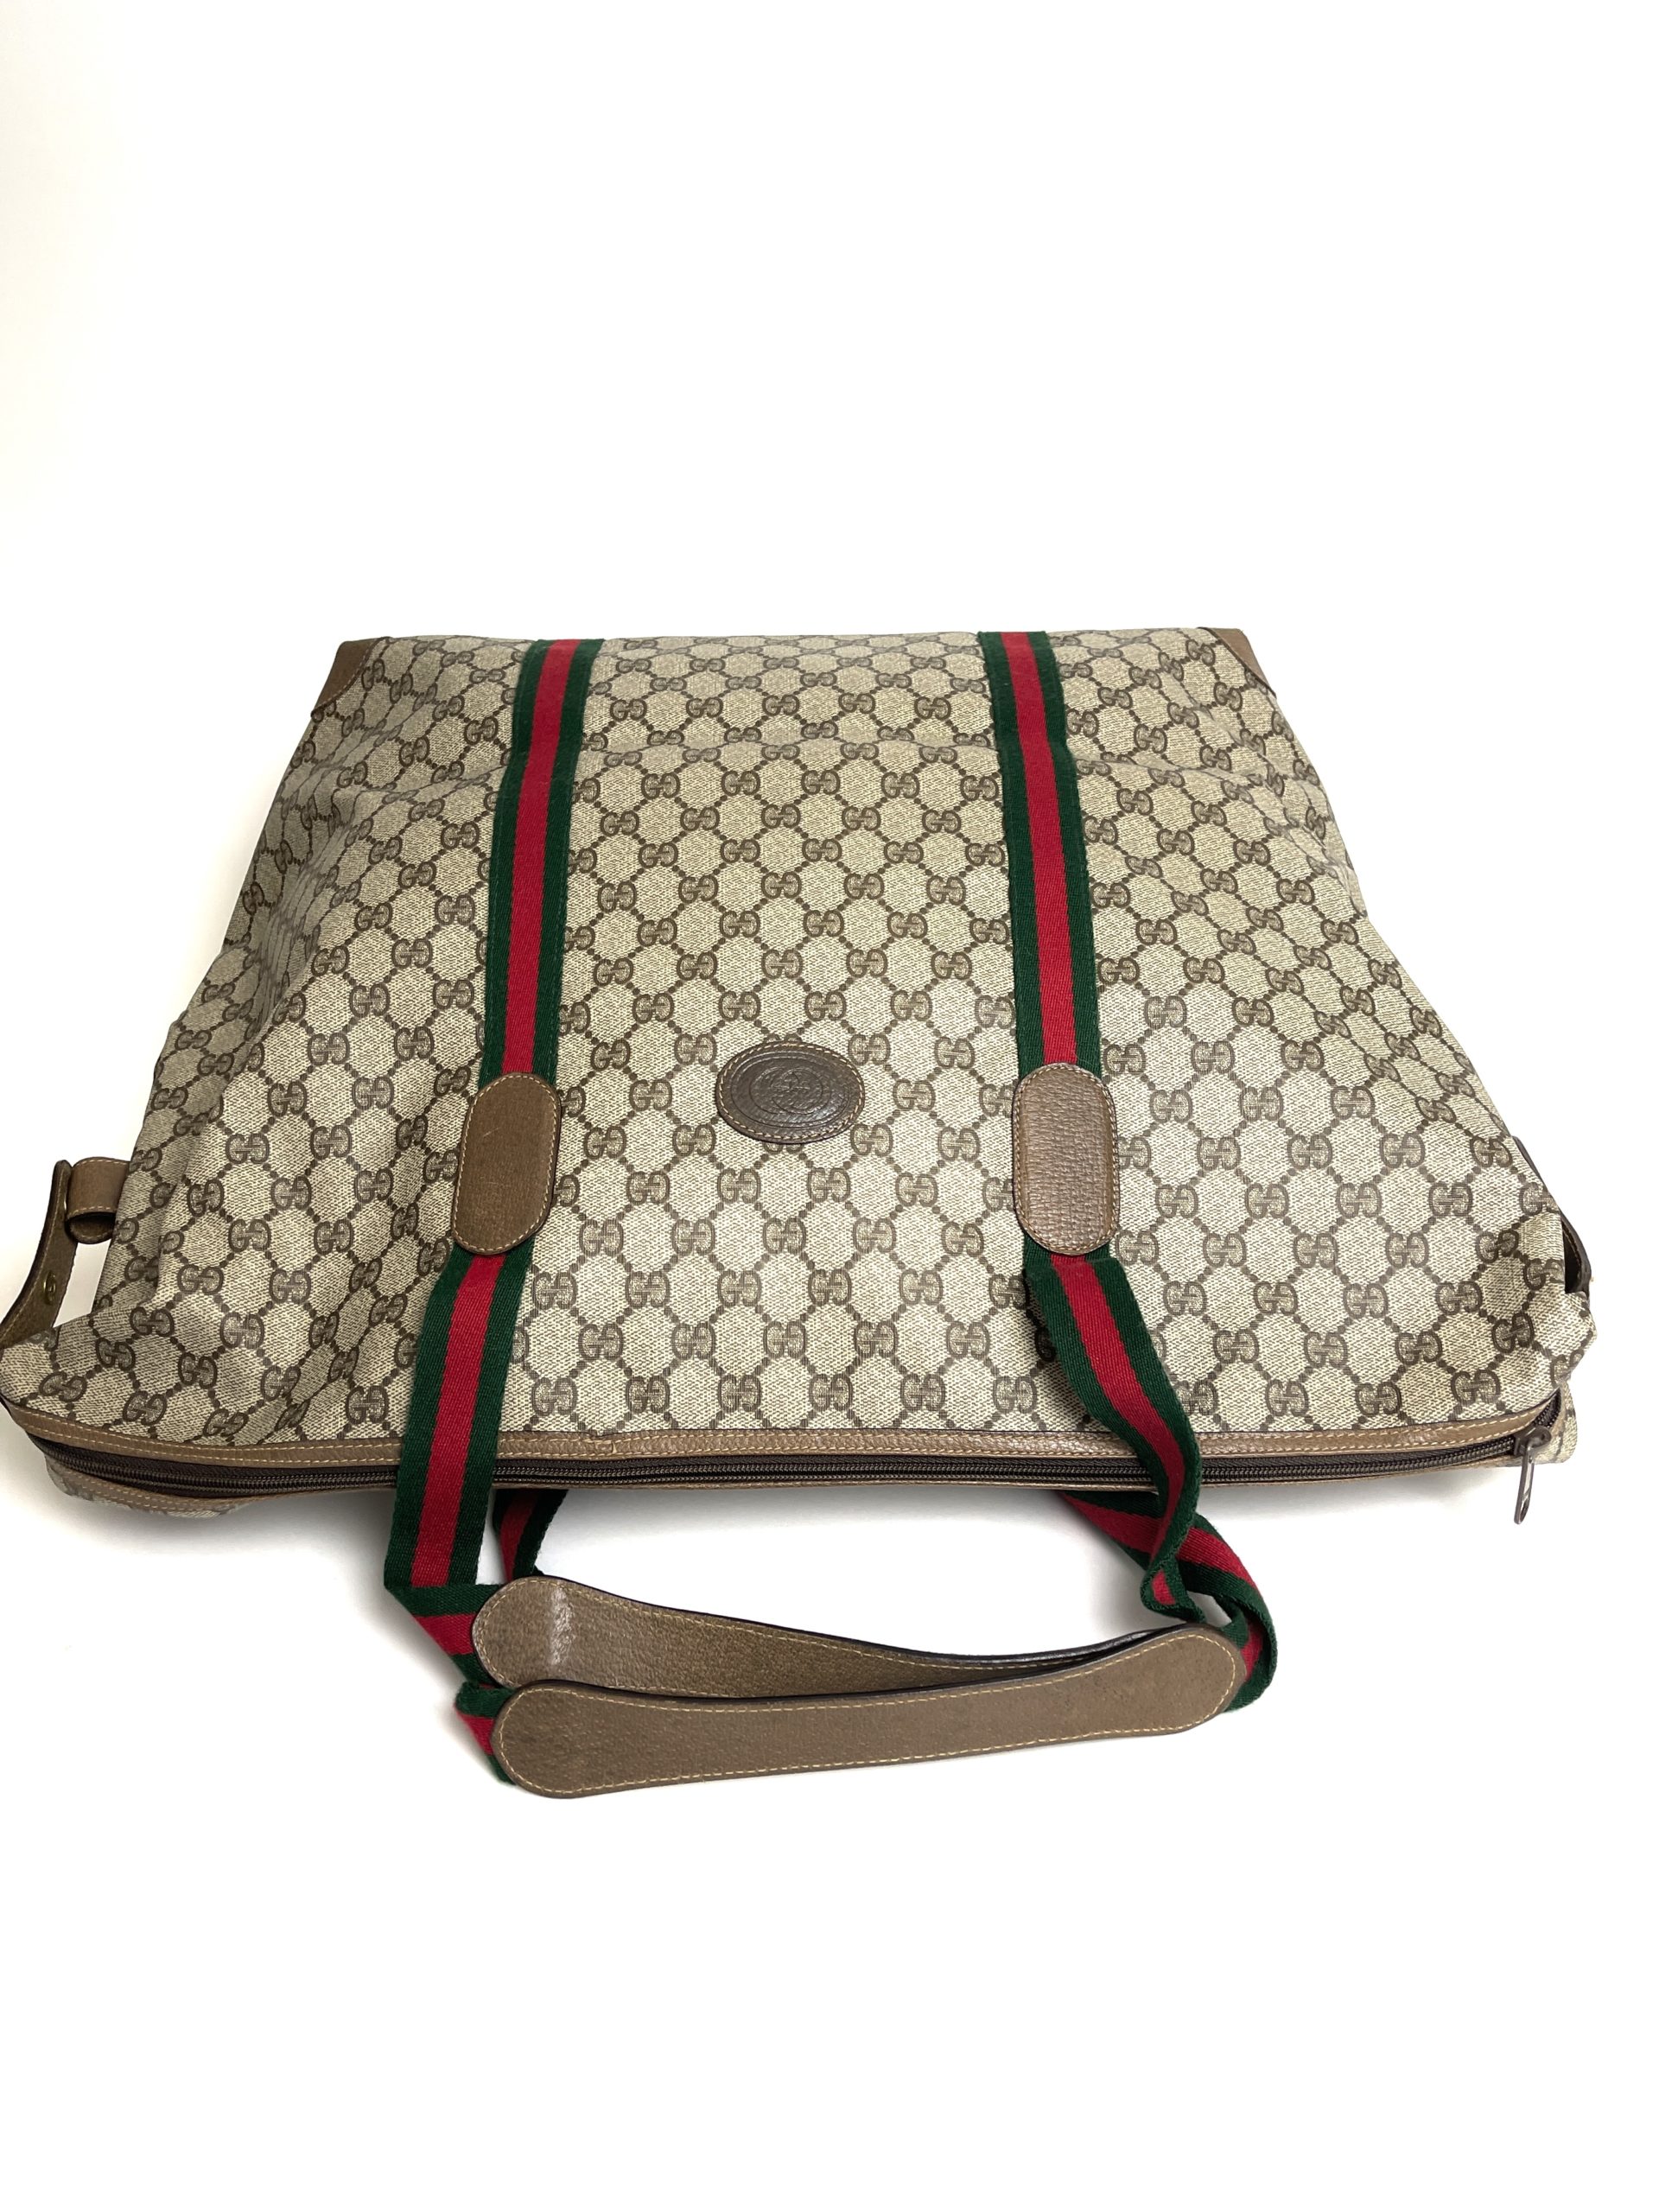 Authentic Gucci Vintage GG Web Canvas crossbody messenger tote bag ❣️❣️